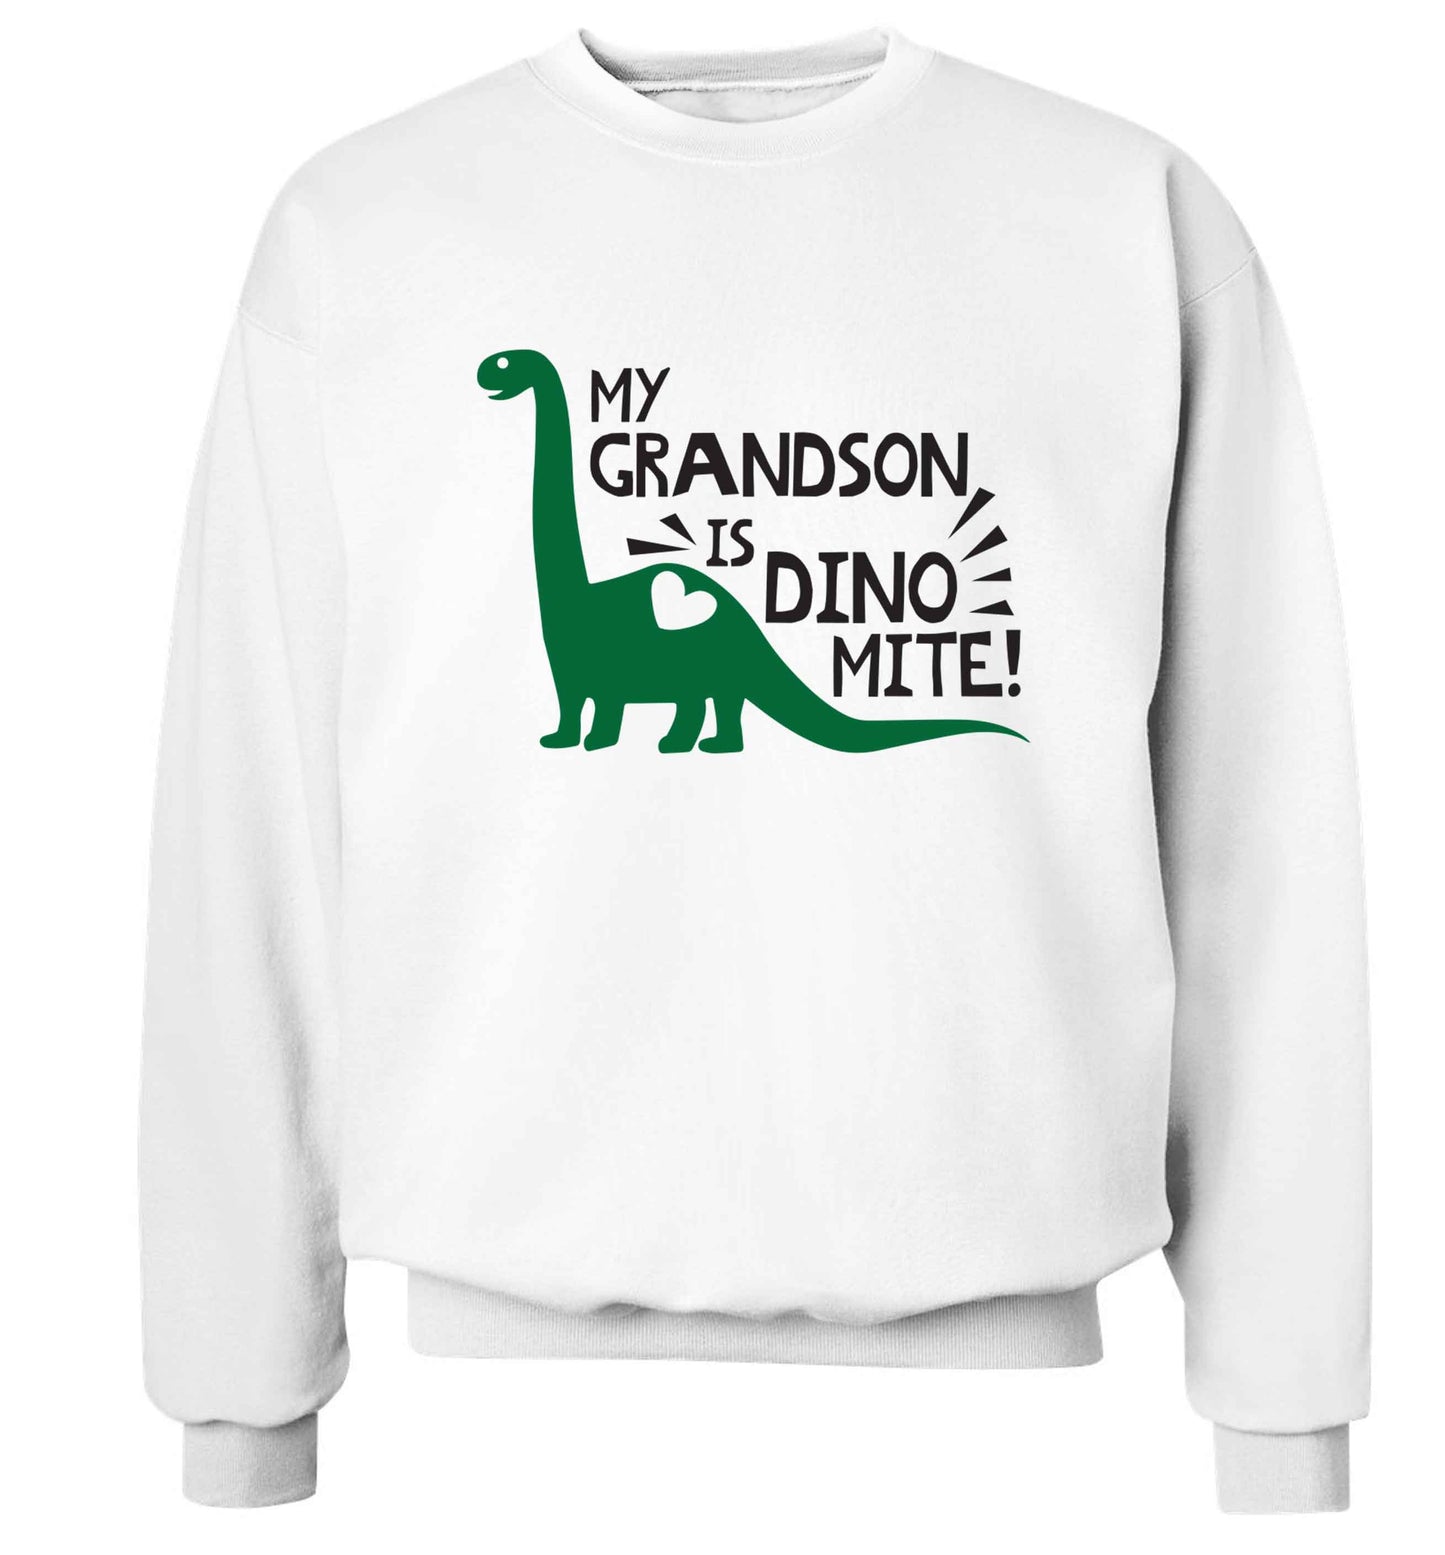 My grandson is dinomite! Adult's unisex white Sweater 2XL